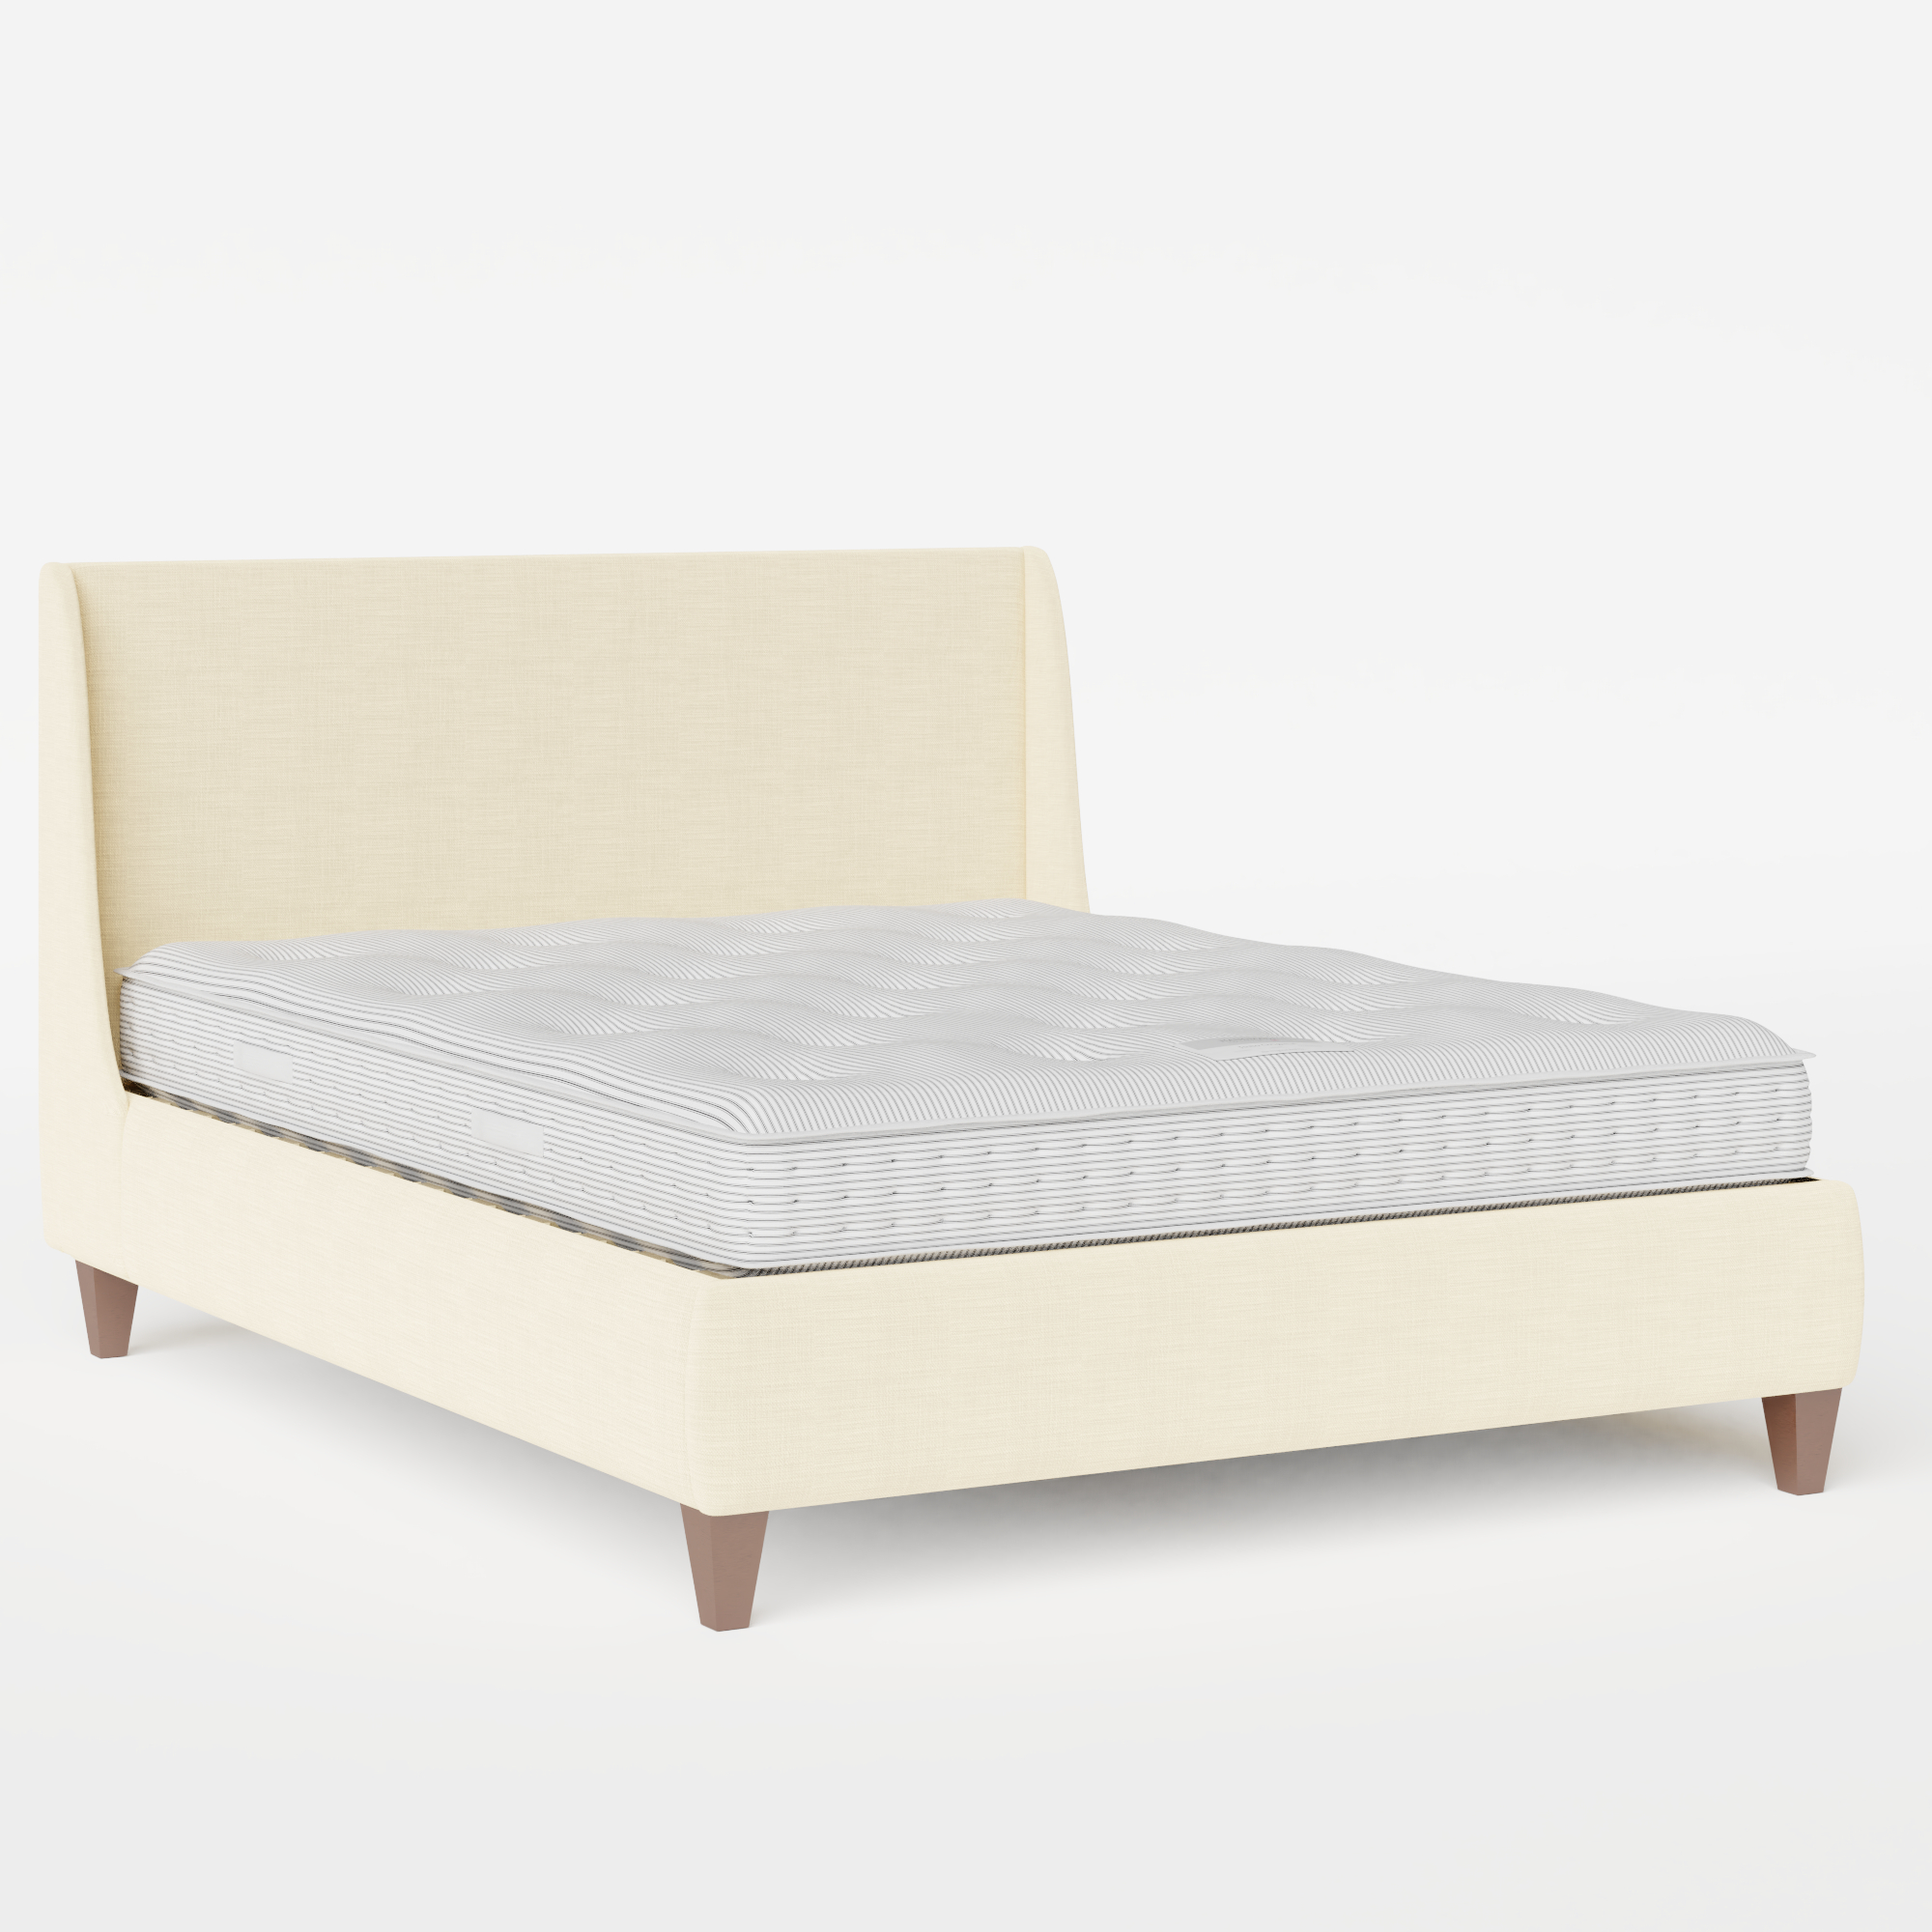 Sunderland upholstered bed in natural fabric